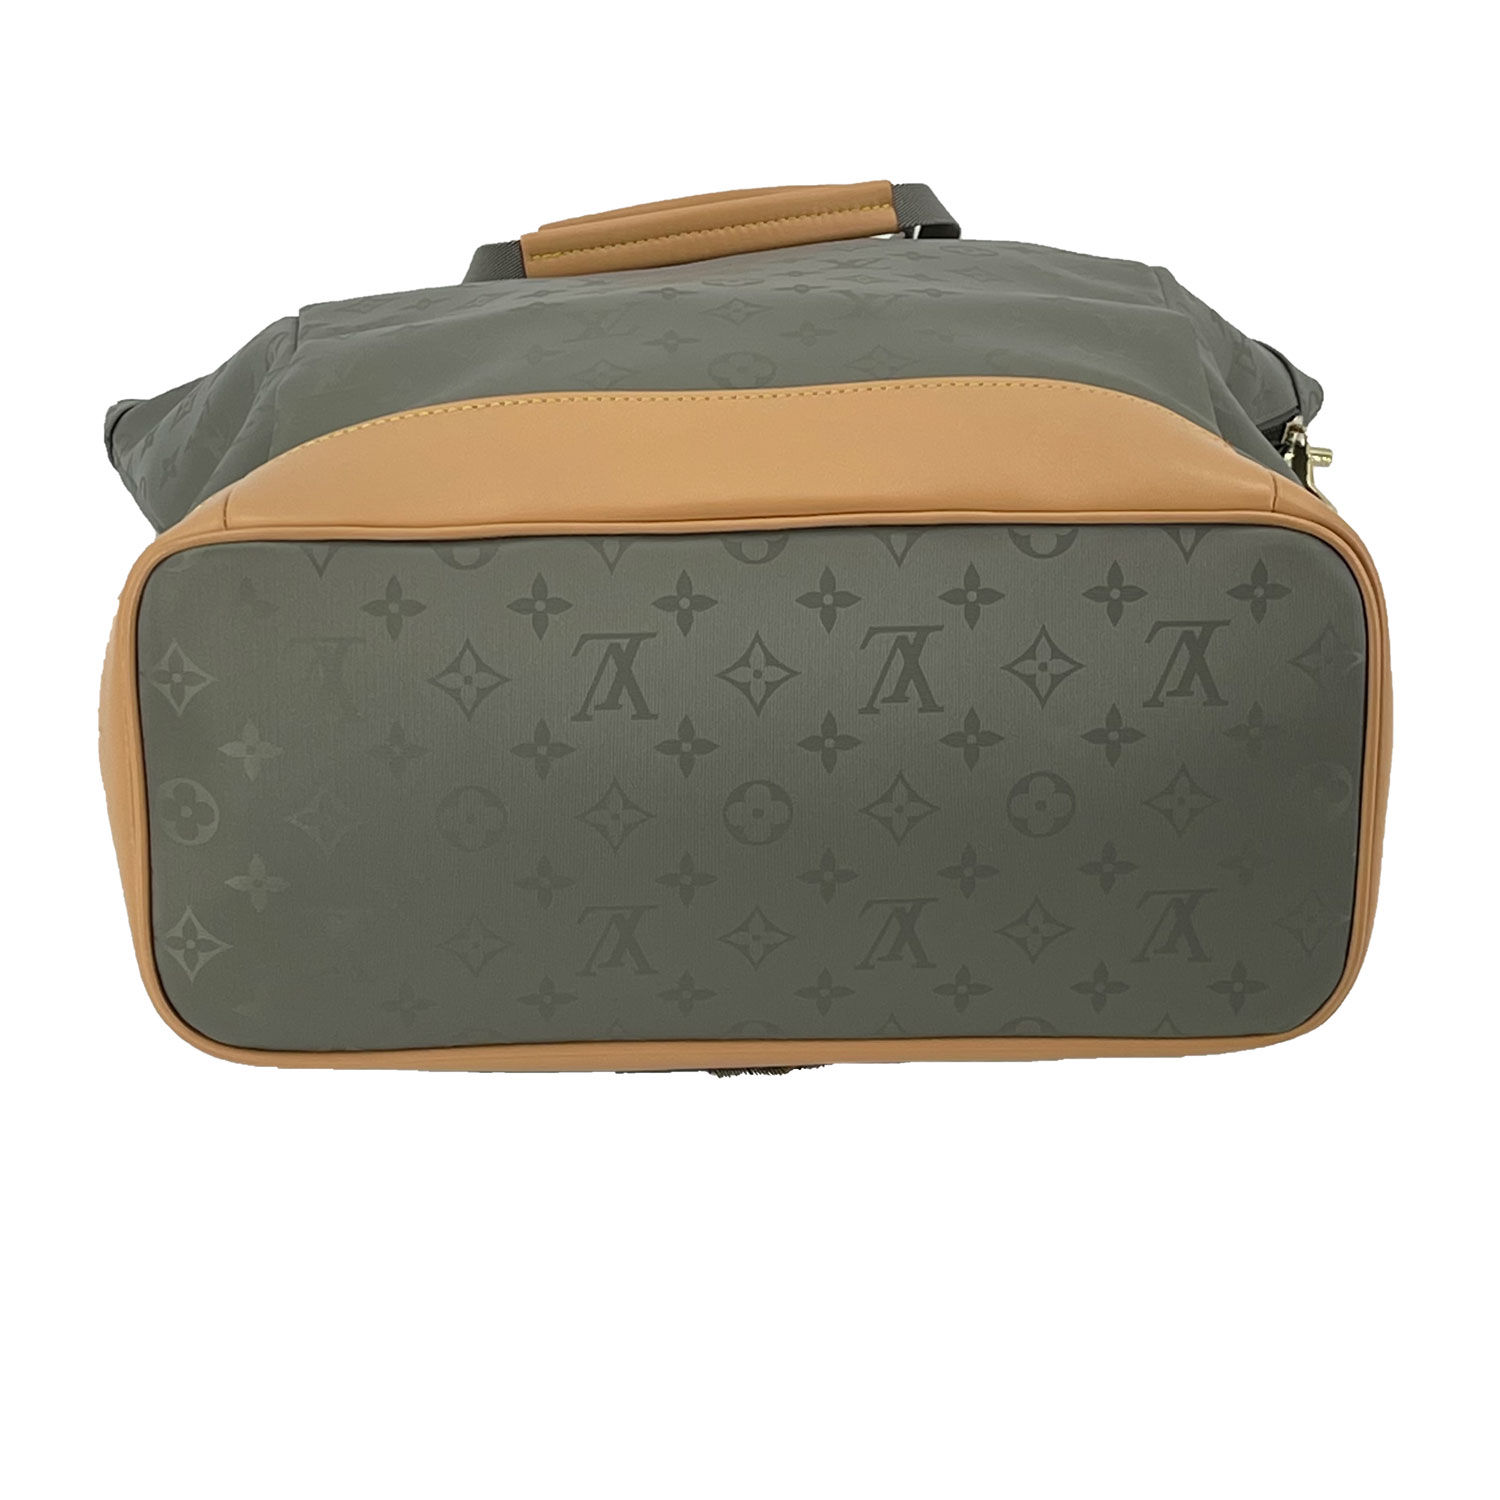 Louis Vuitton Titanium Tote Backpack